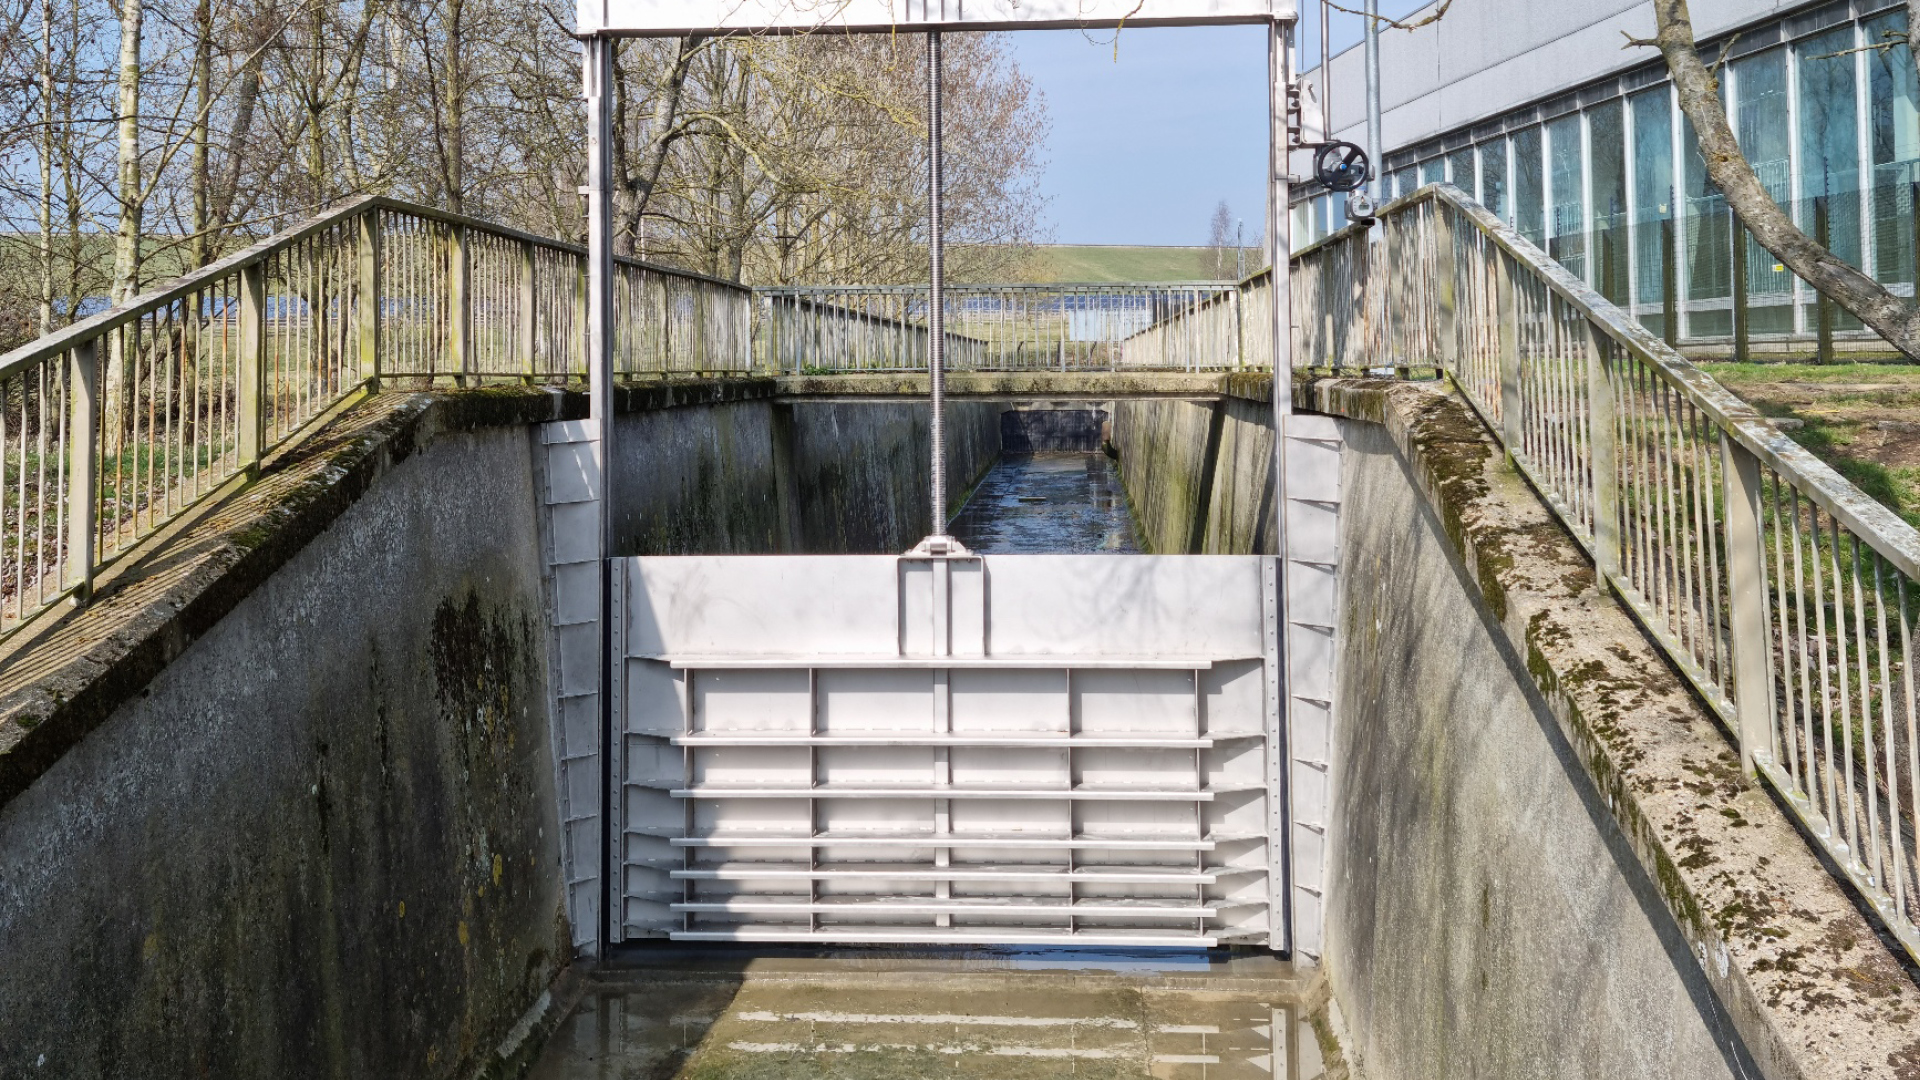 5 meter Penstock Installation on Major Reservoir